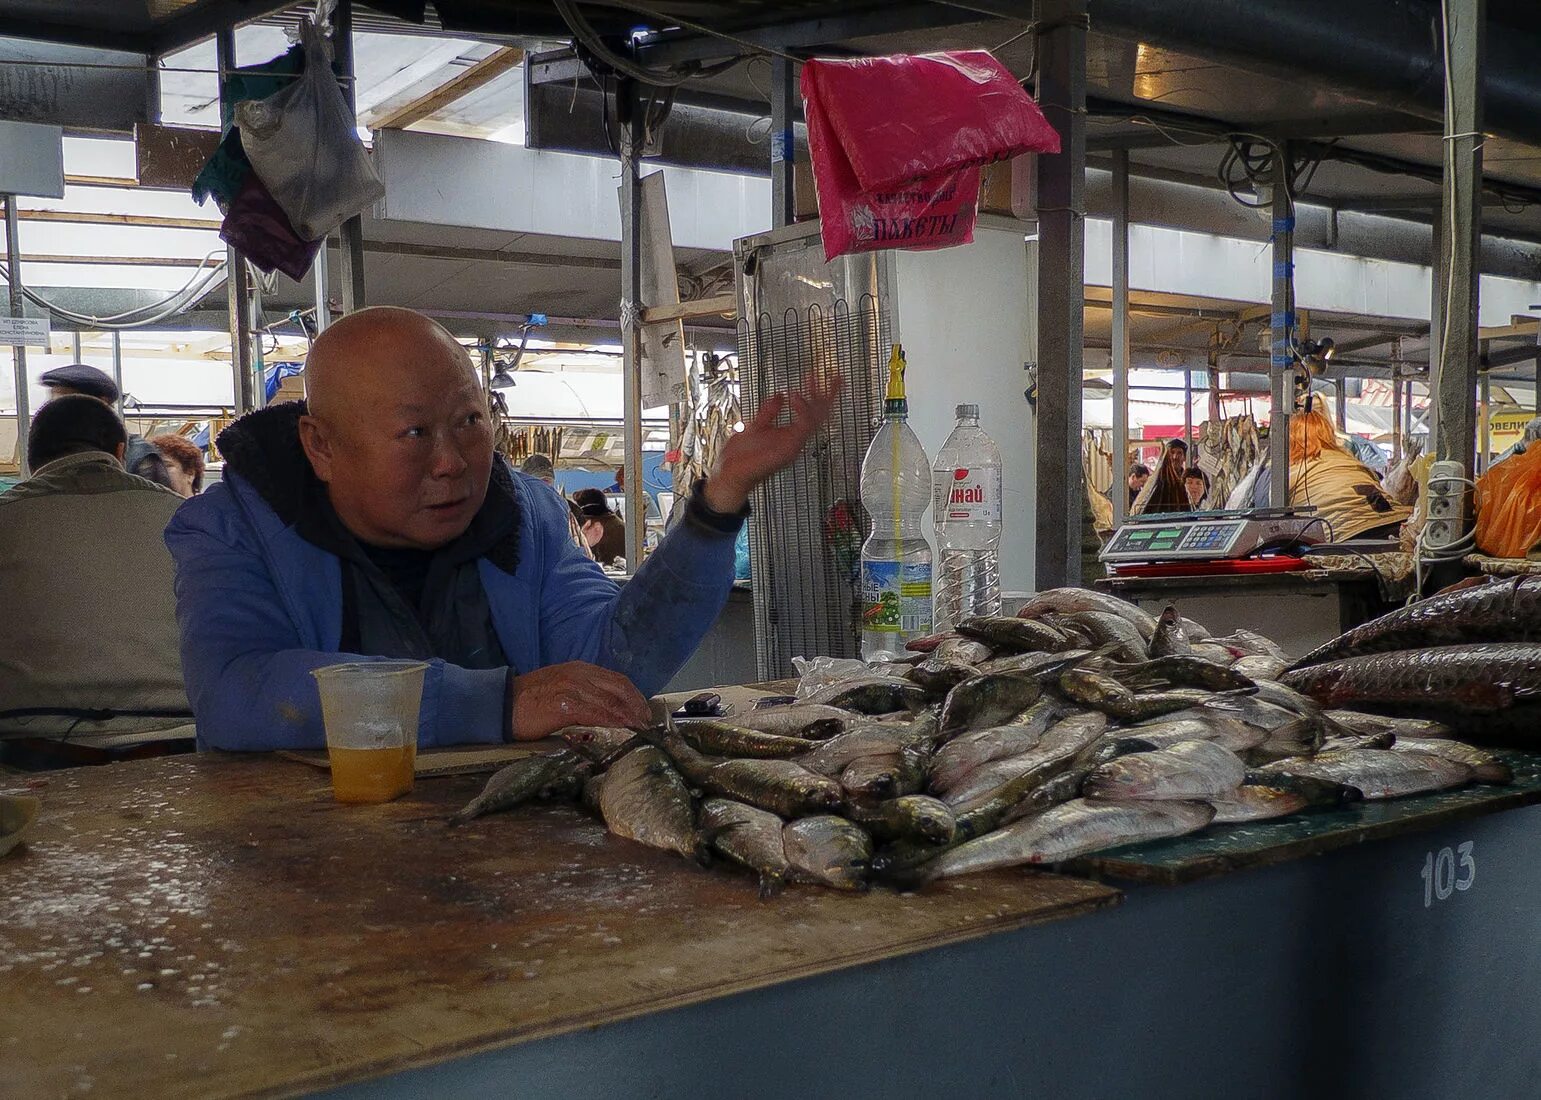 Центральный рынок Ростова-на-Дону рыбный рынок. Продавец рыбы. Рыба на рынке. Продавец рыбы на рынке. Рыбу купить сегодня